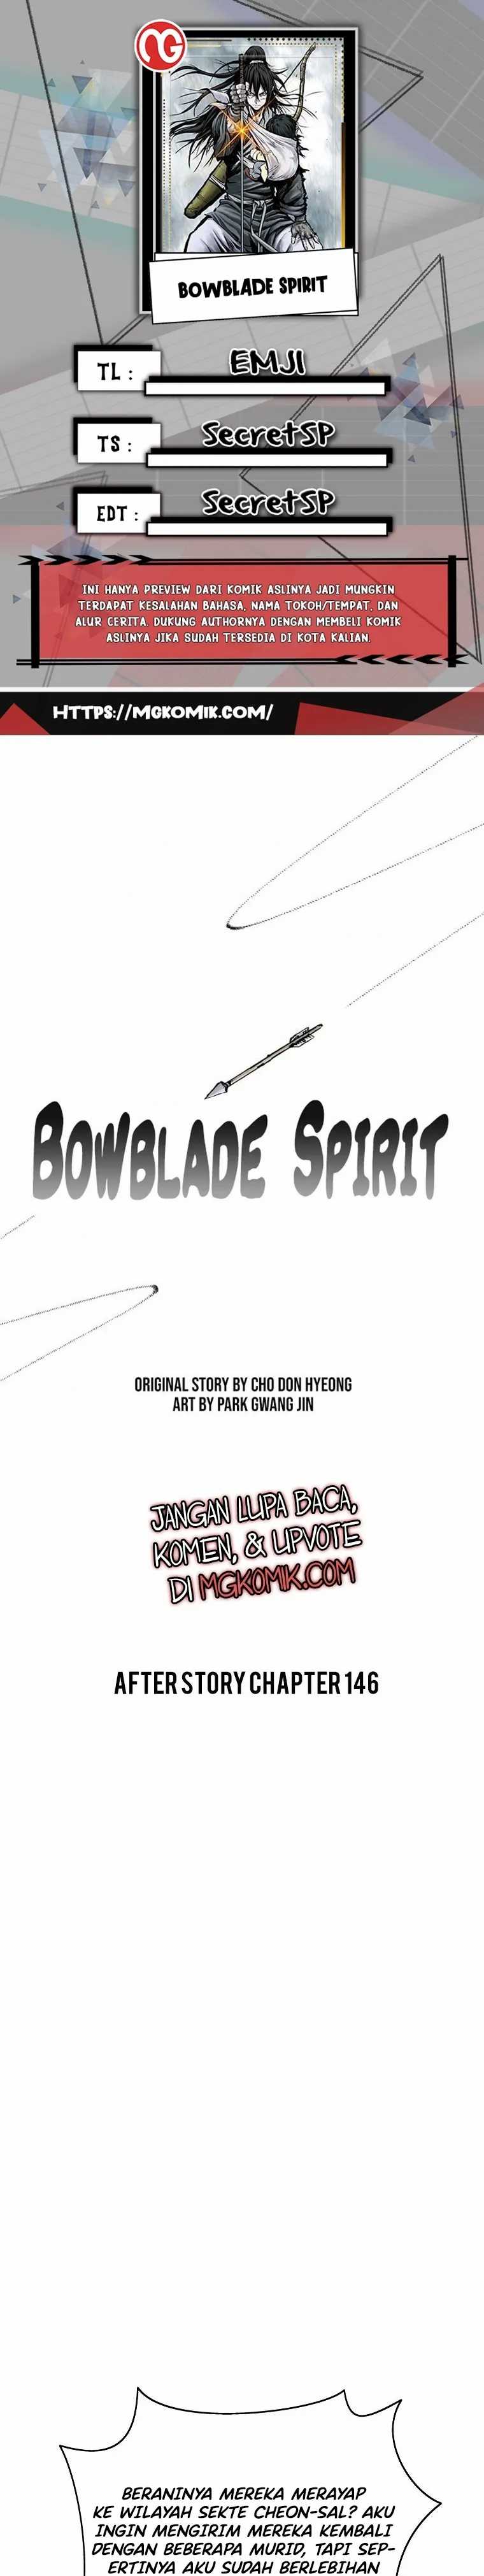 Bowblade Spirit Chapter 146